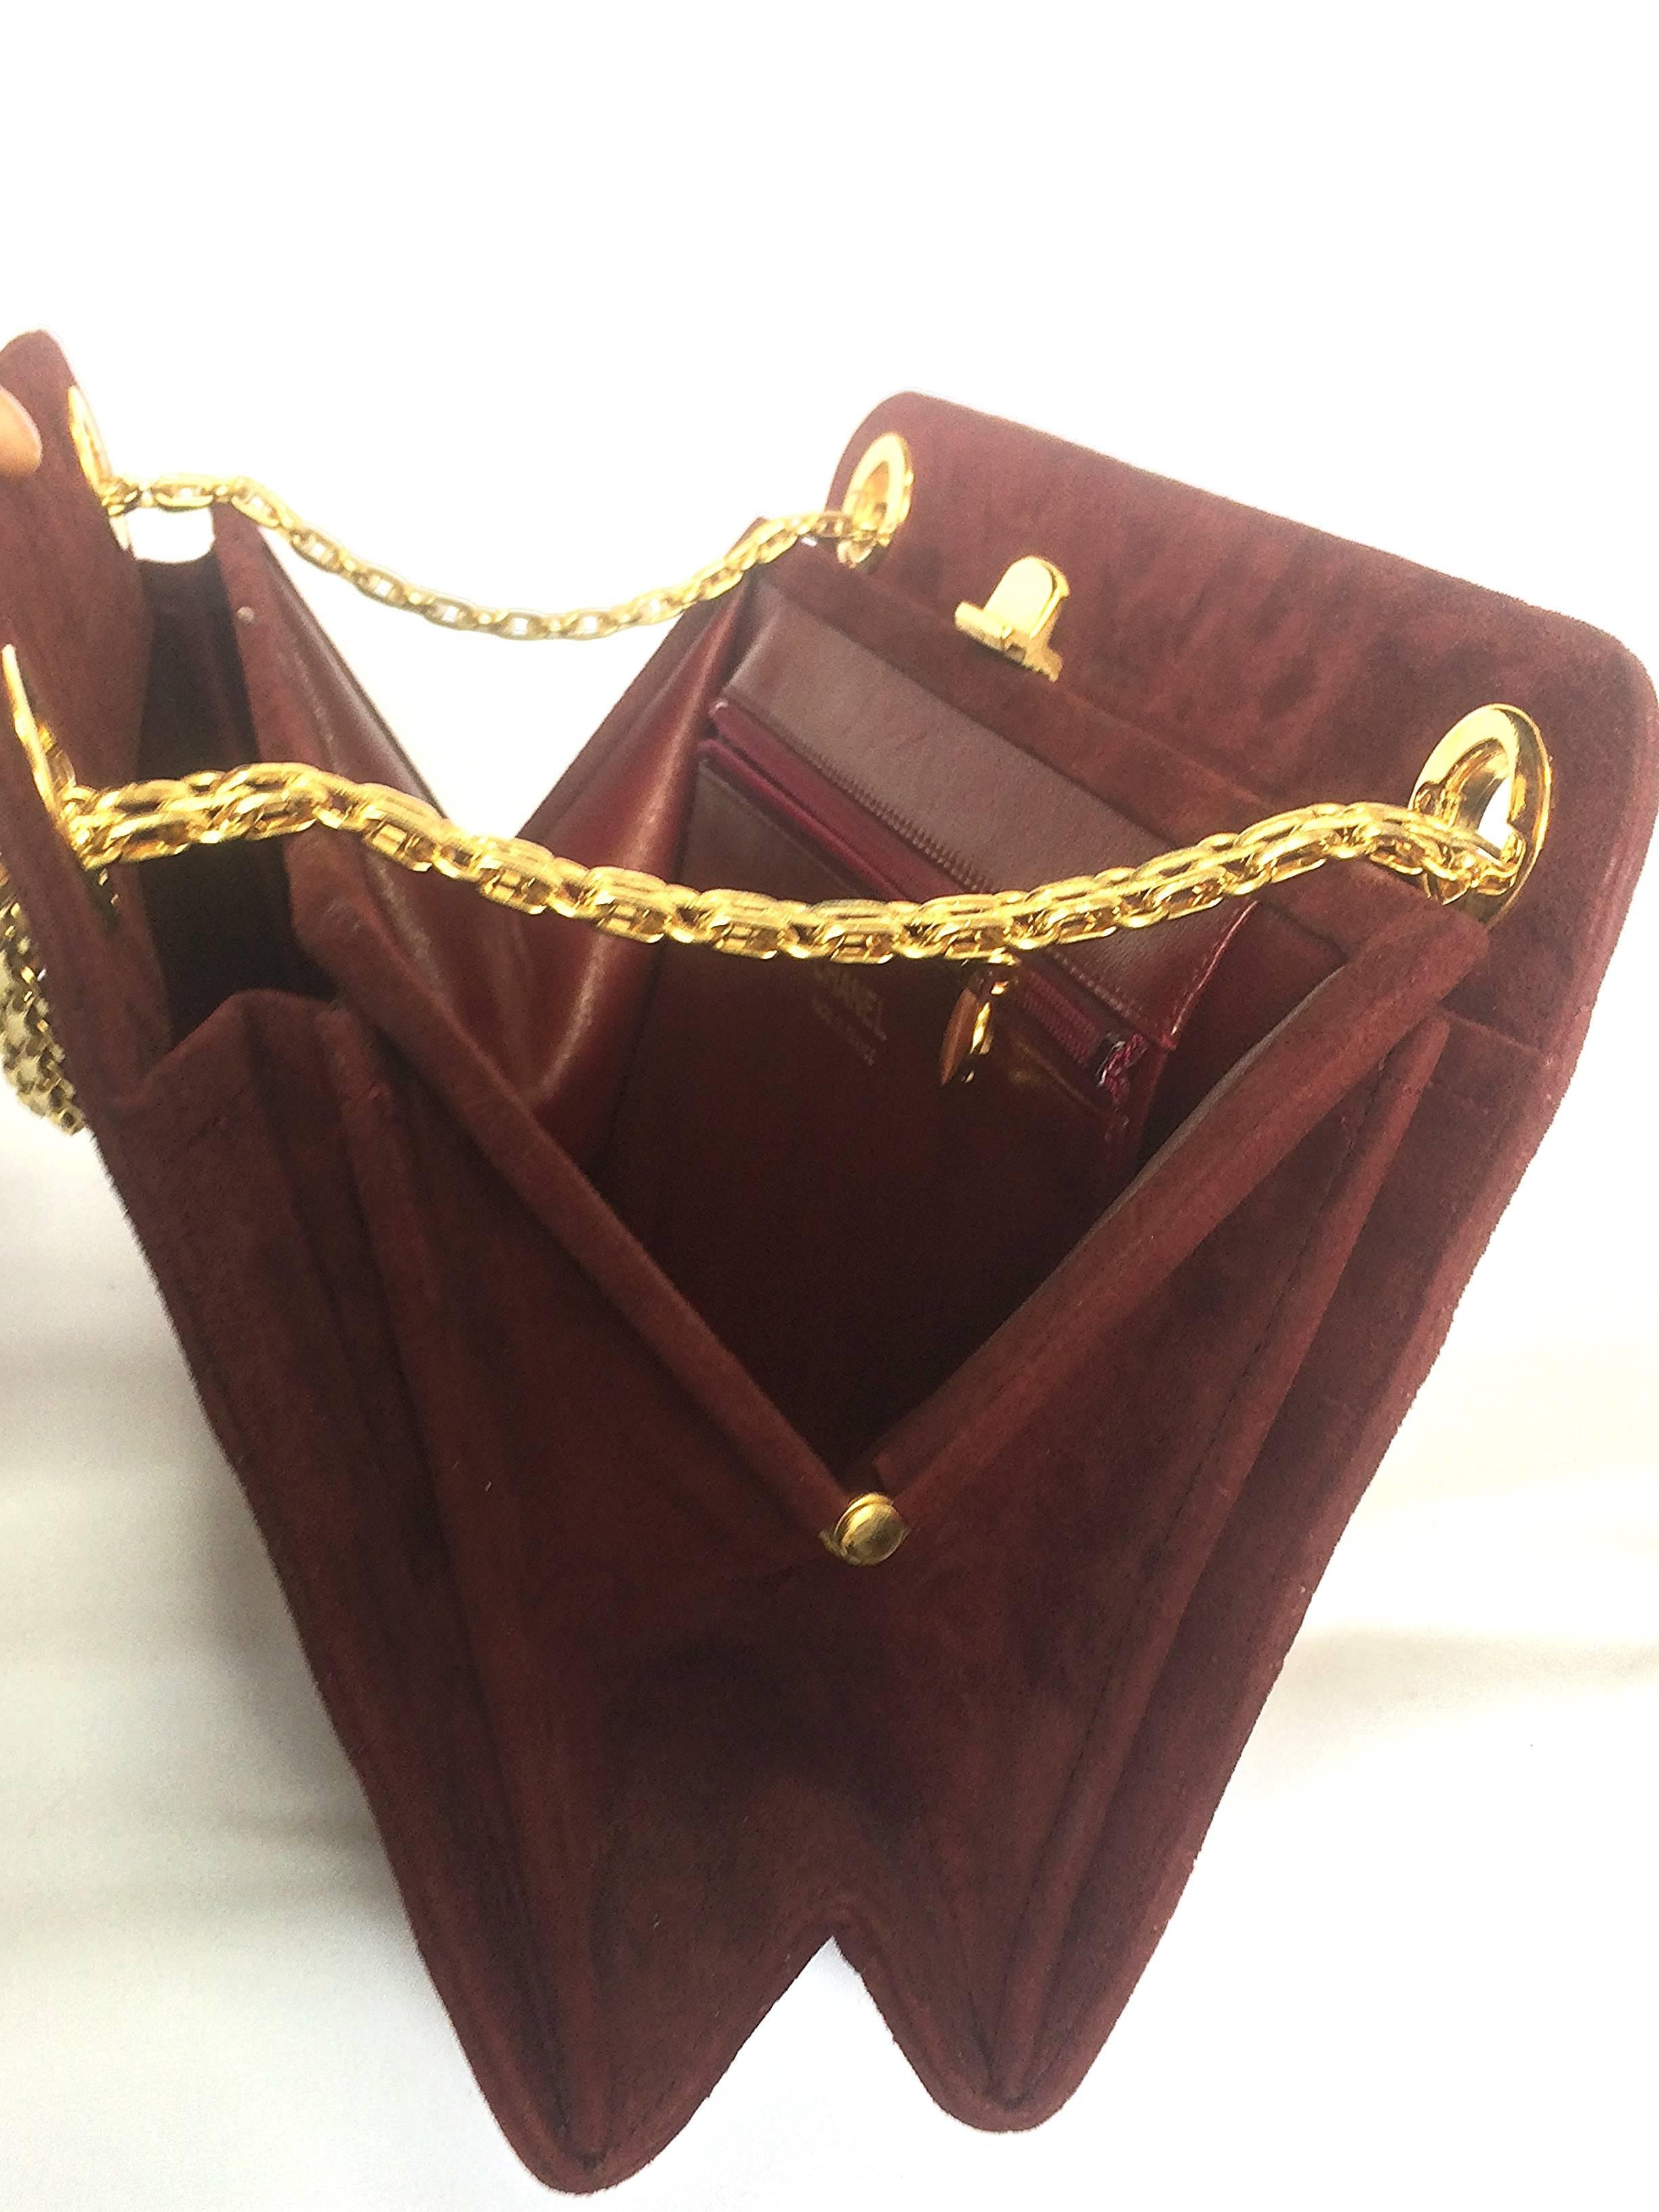 Vintage CHANEL genuine wine, bordeaux suede shoulder bag with golden chain strap 1